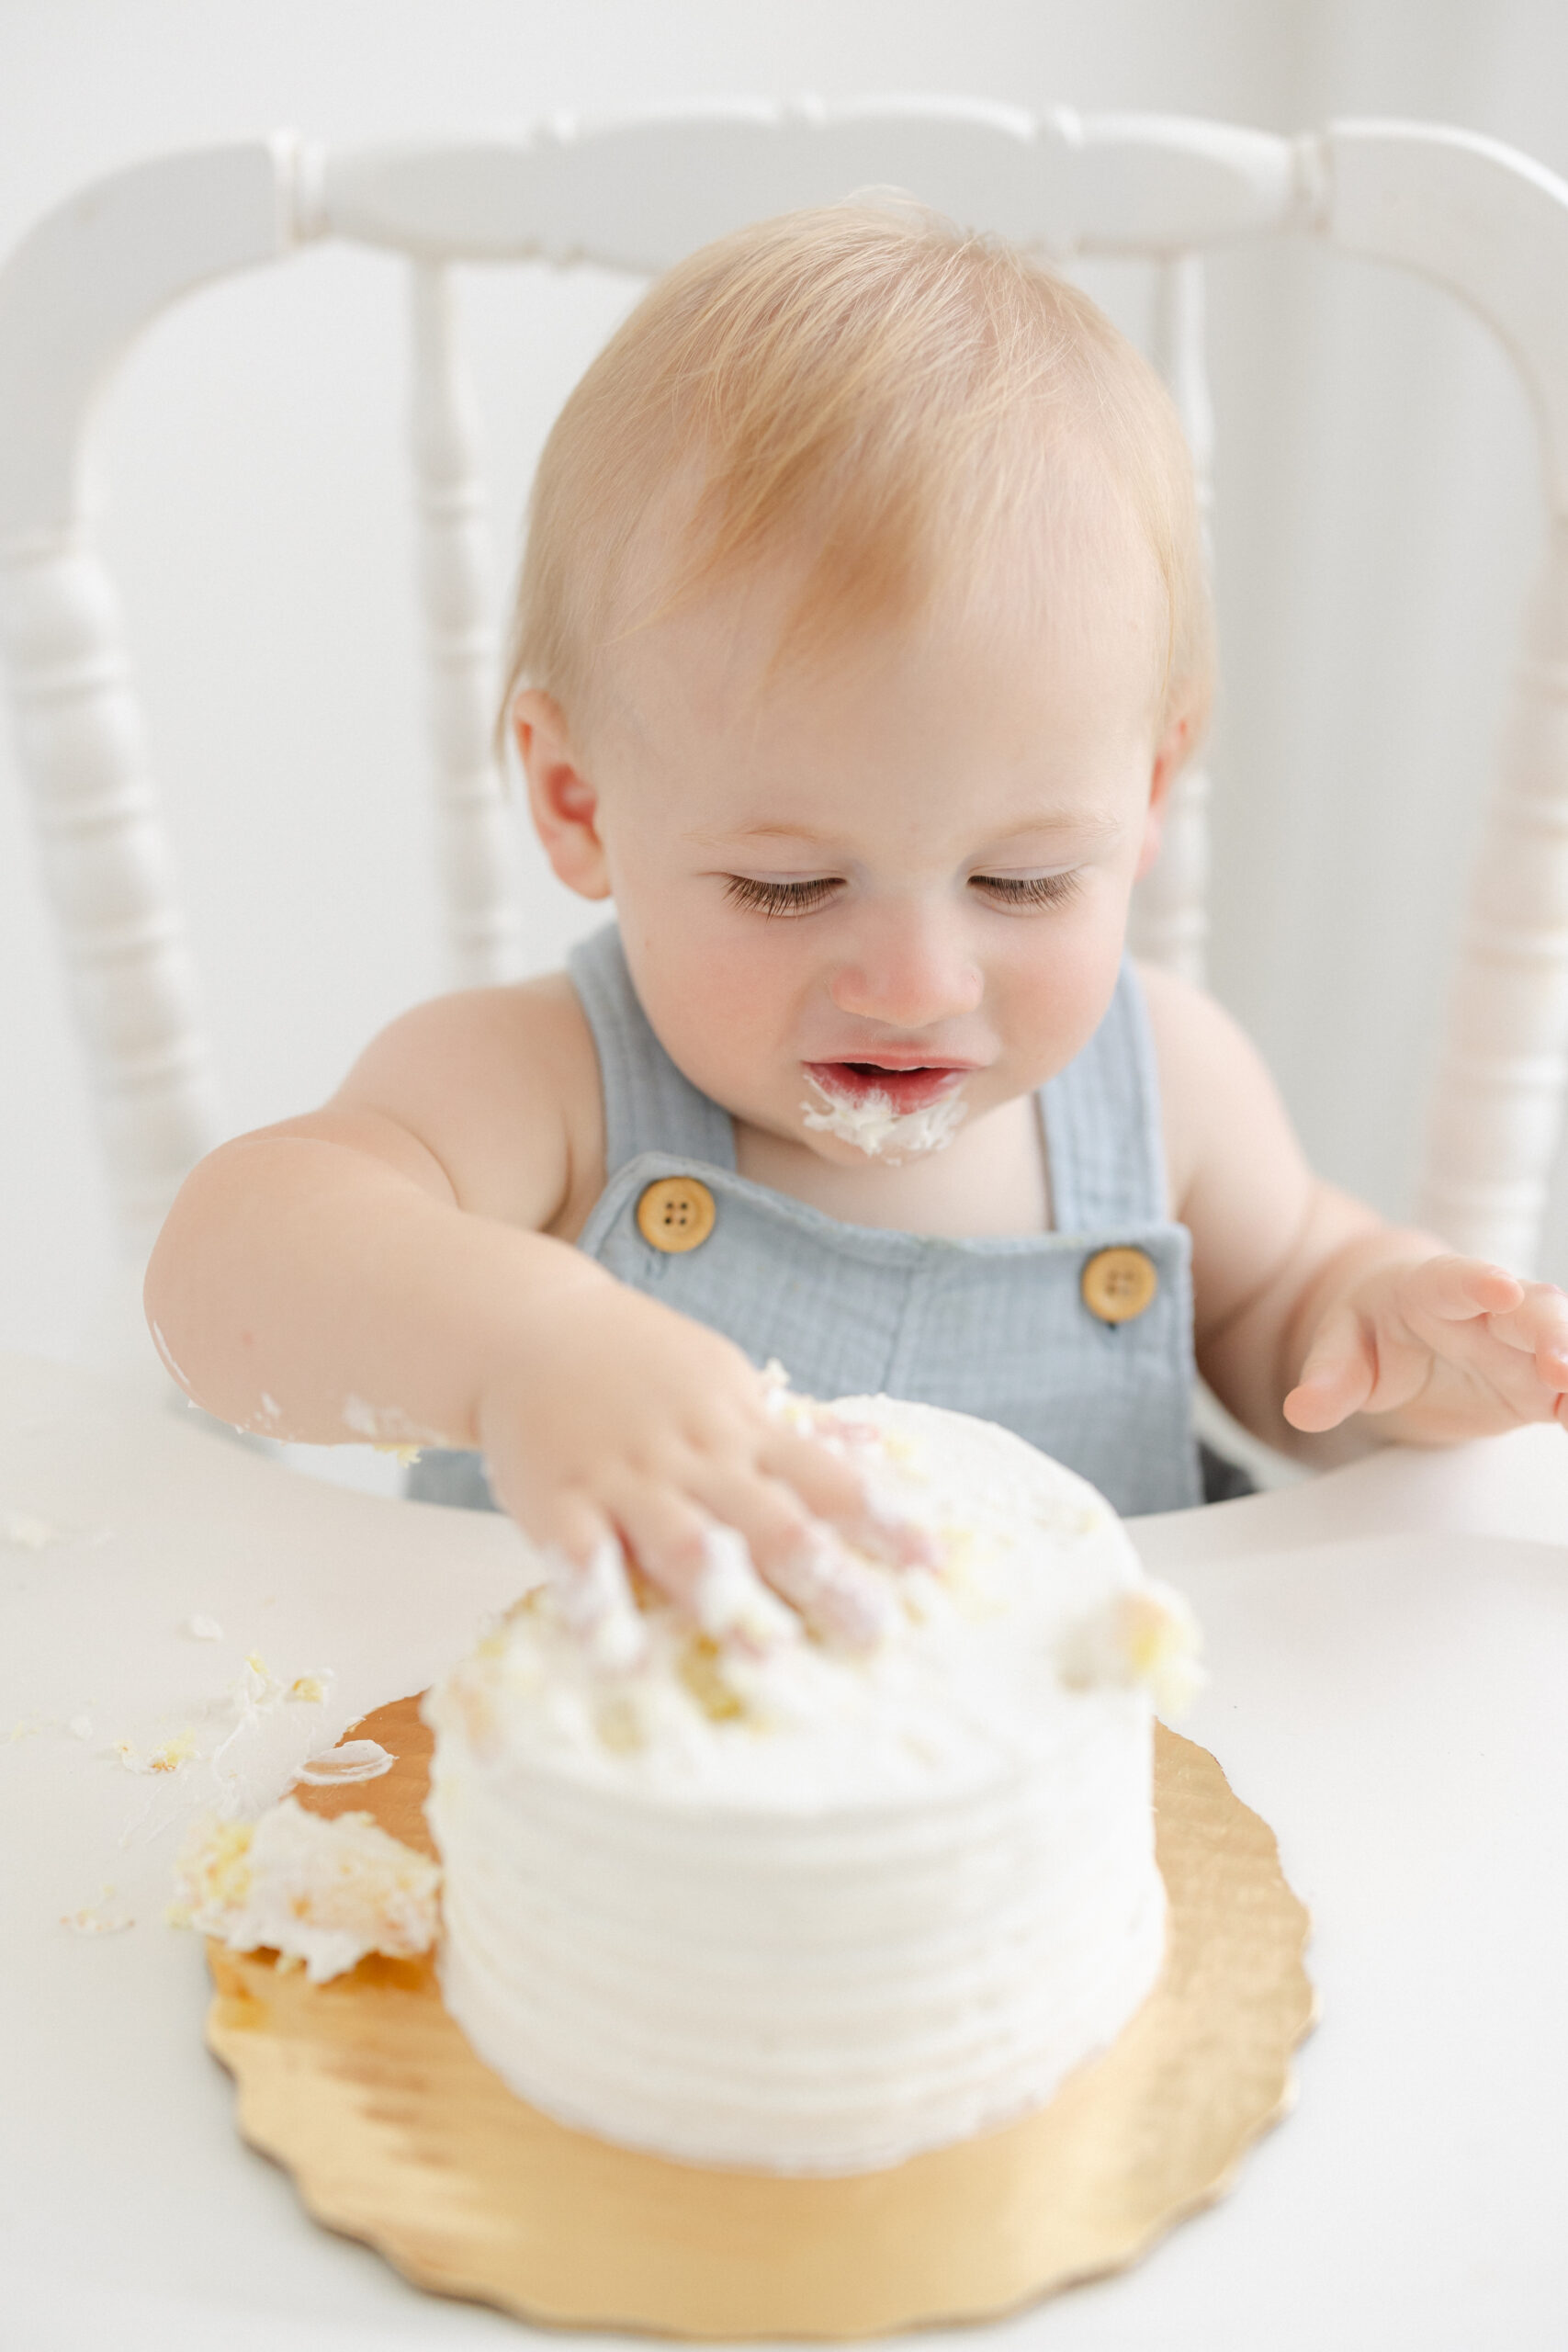 on year old eating cake